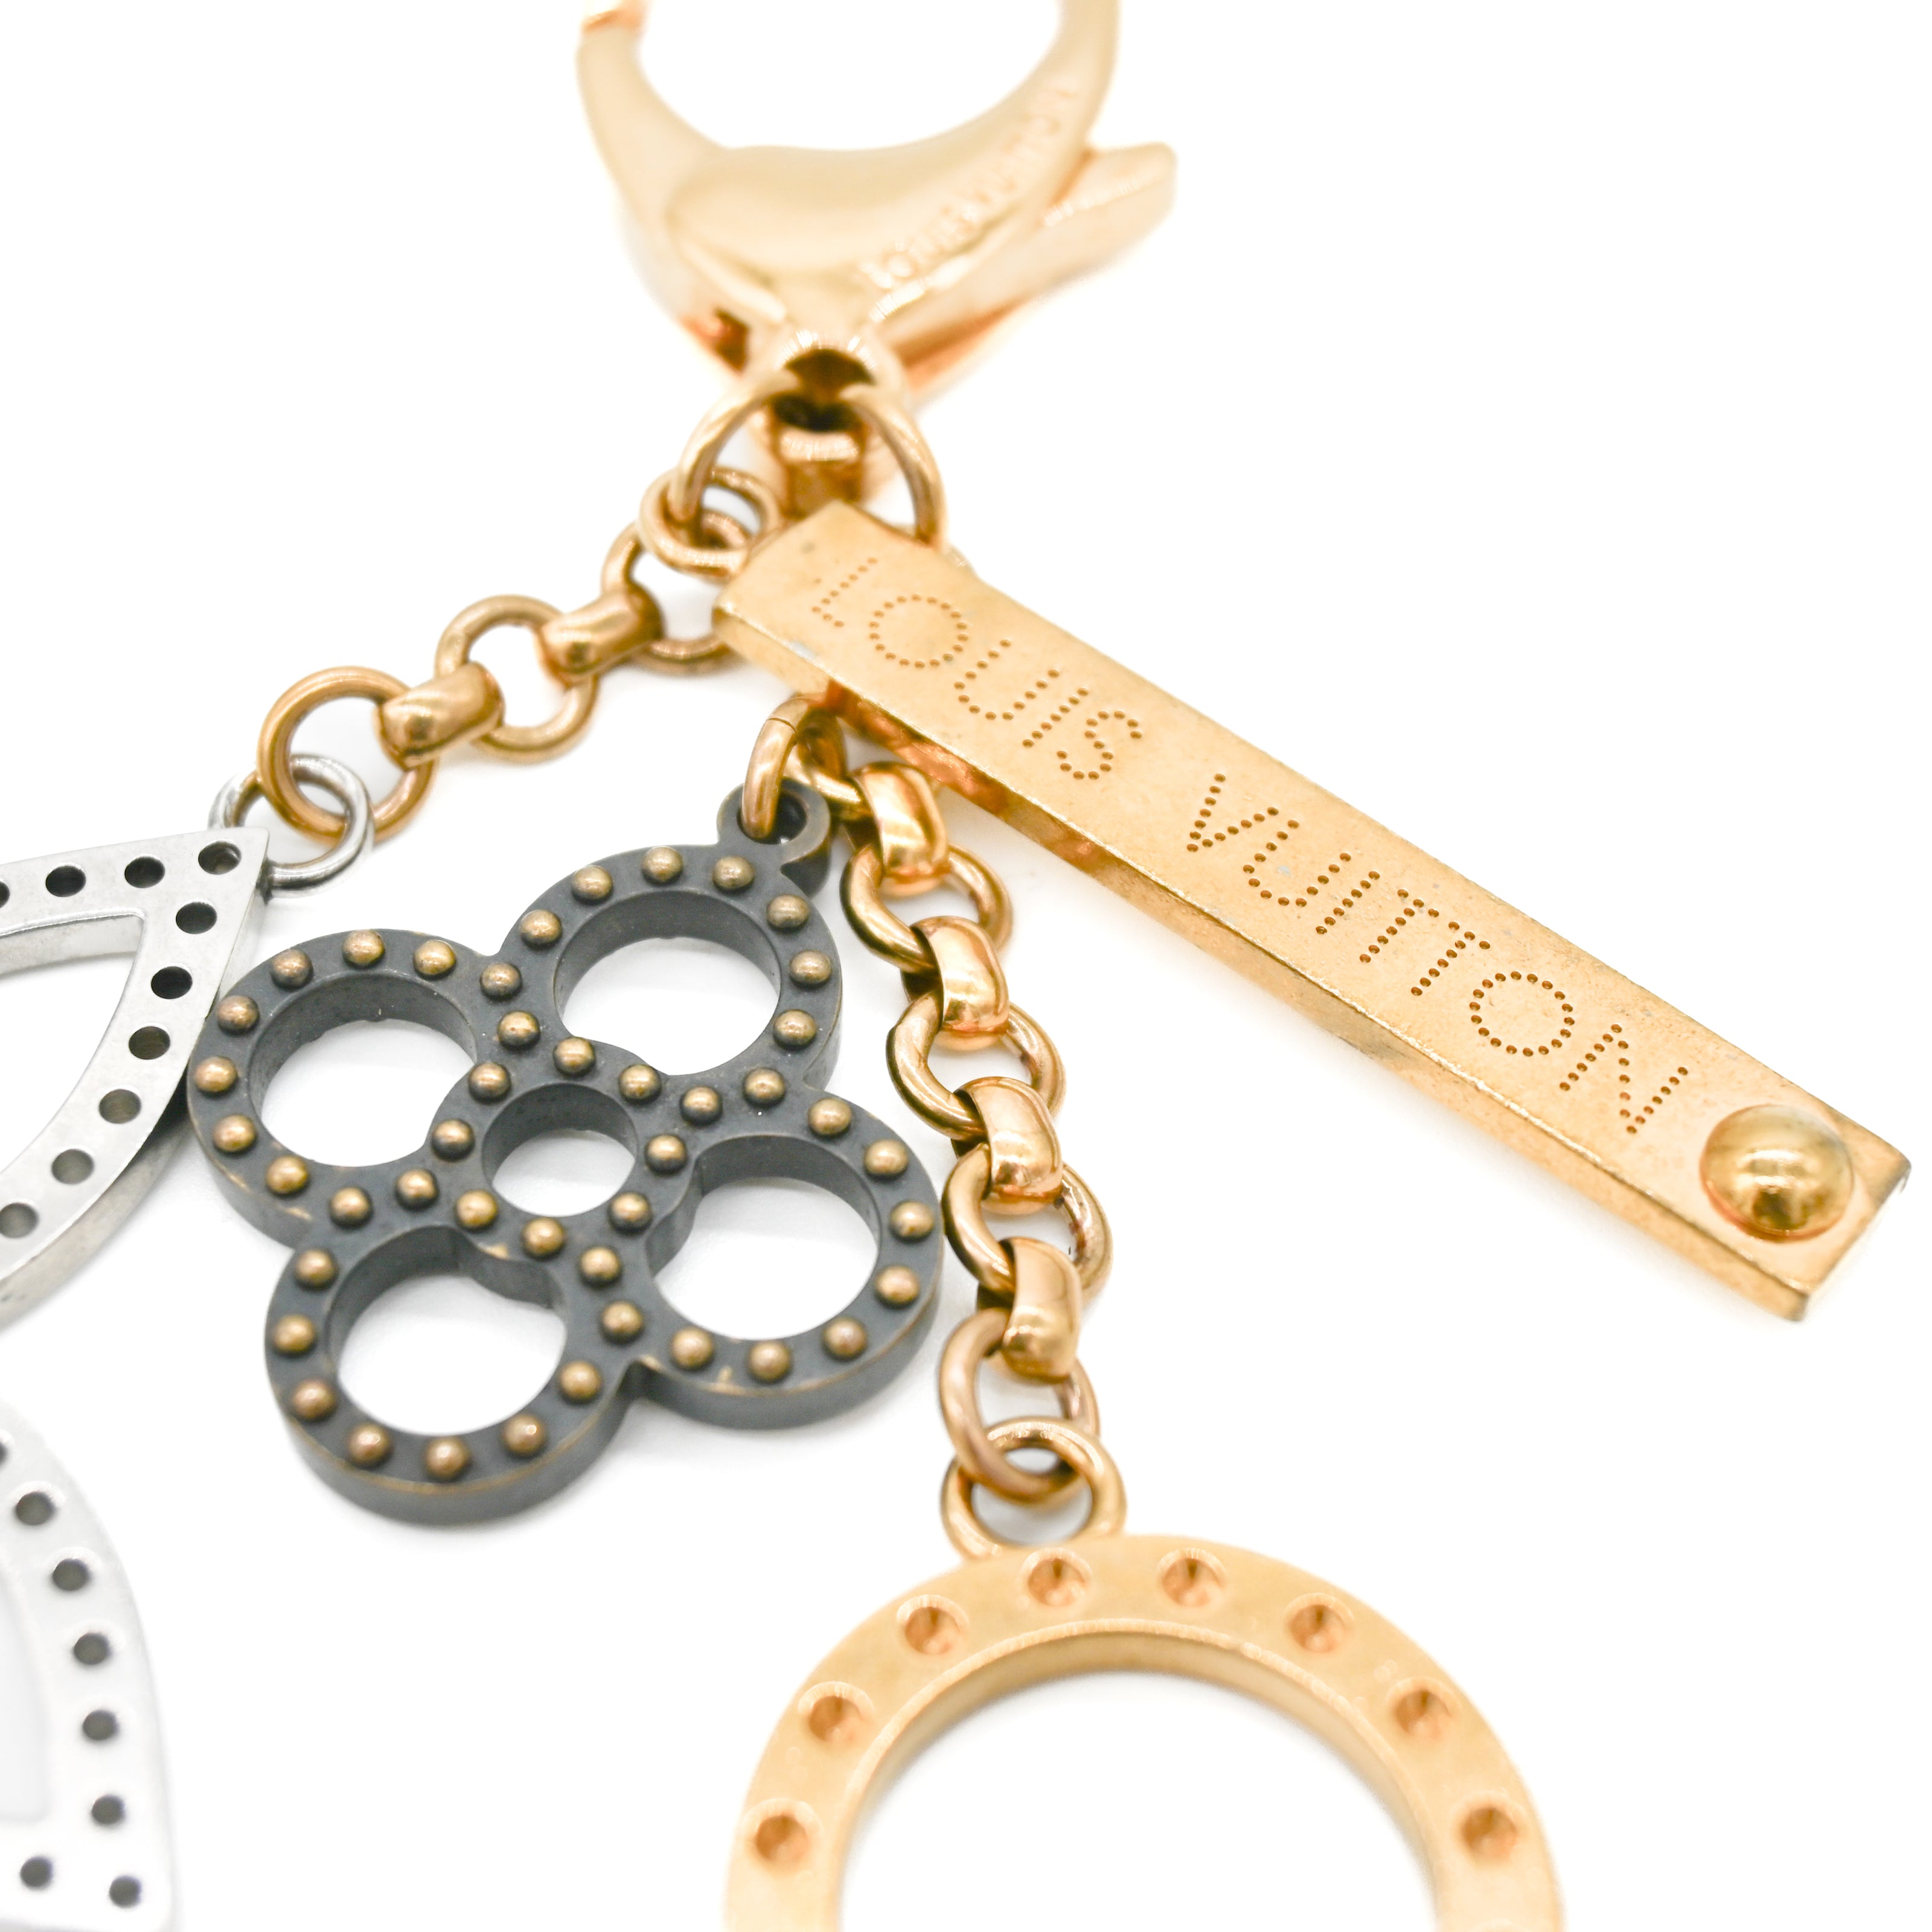 Louis Vuitton Bijou Sac Insolence Gold Tortoiseshell Monogram Keychain Bag  Charm